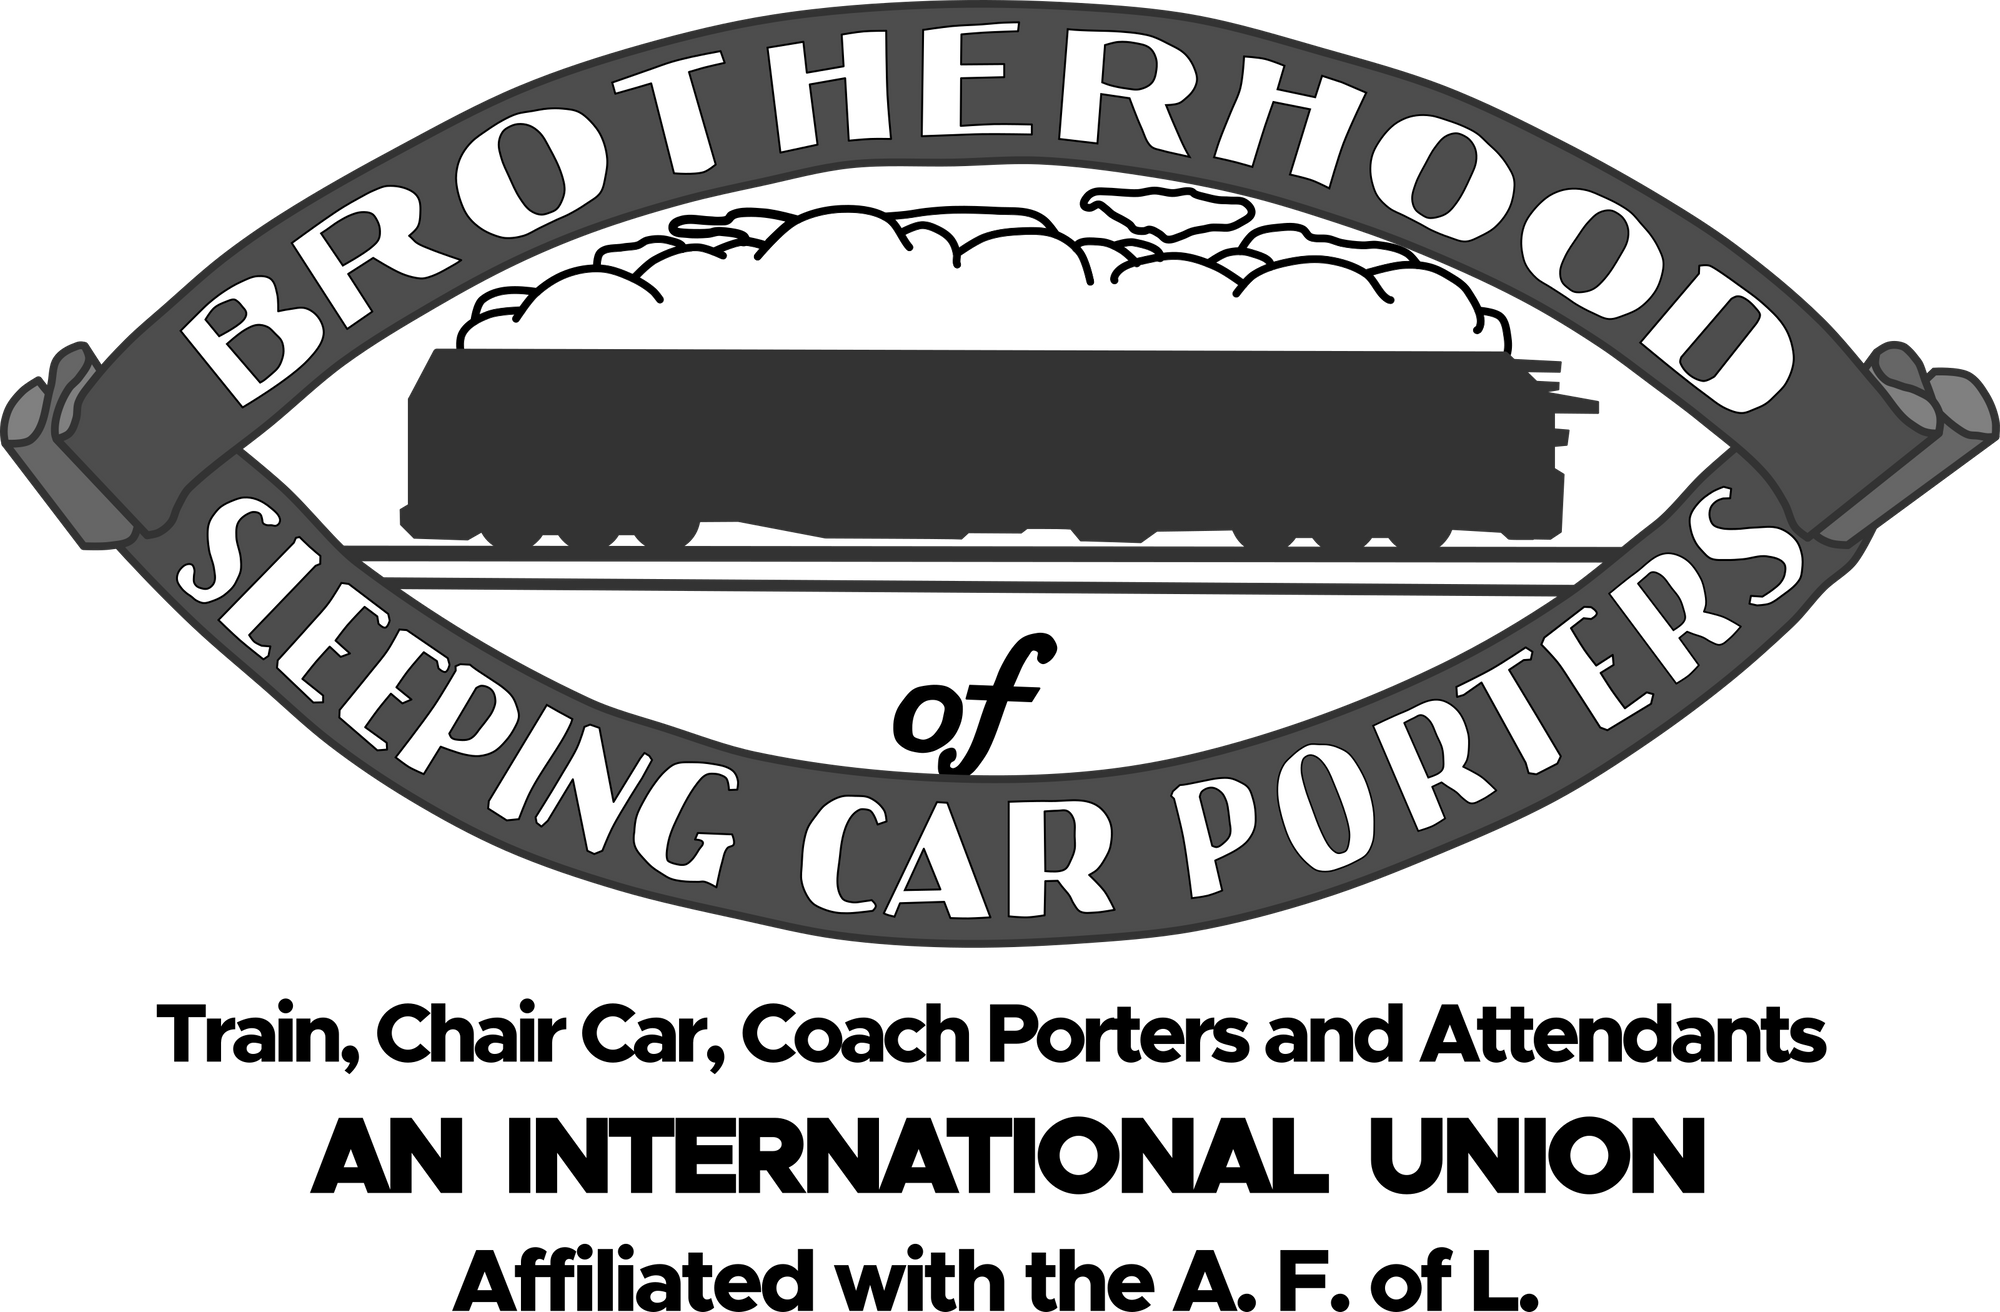 Forensic Graphic Design: the Brotherhood of Sleeping Car Porters